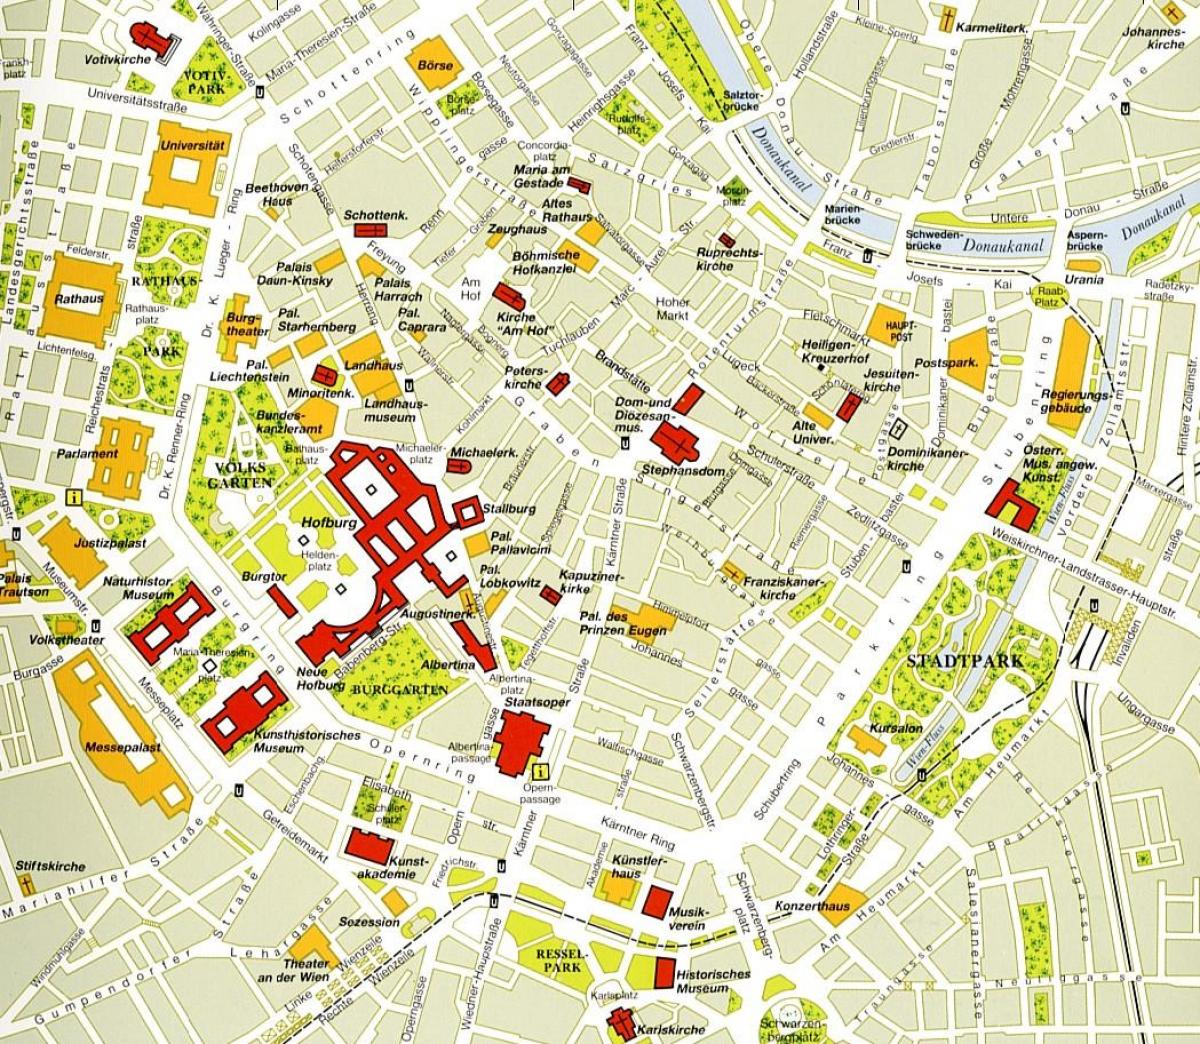 Vienna center mapa